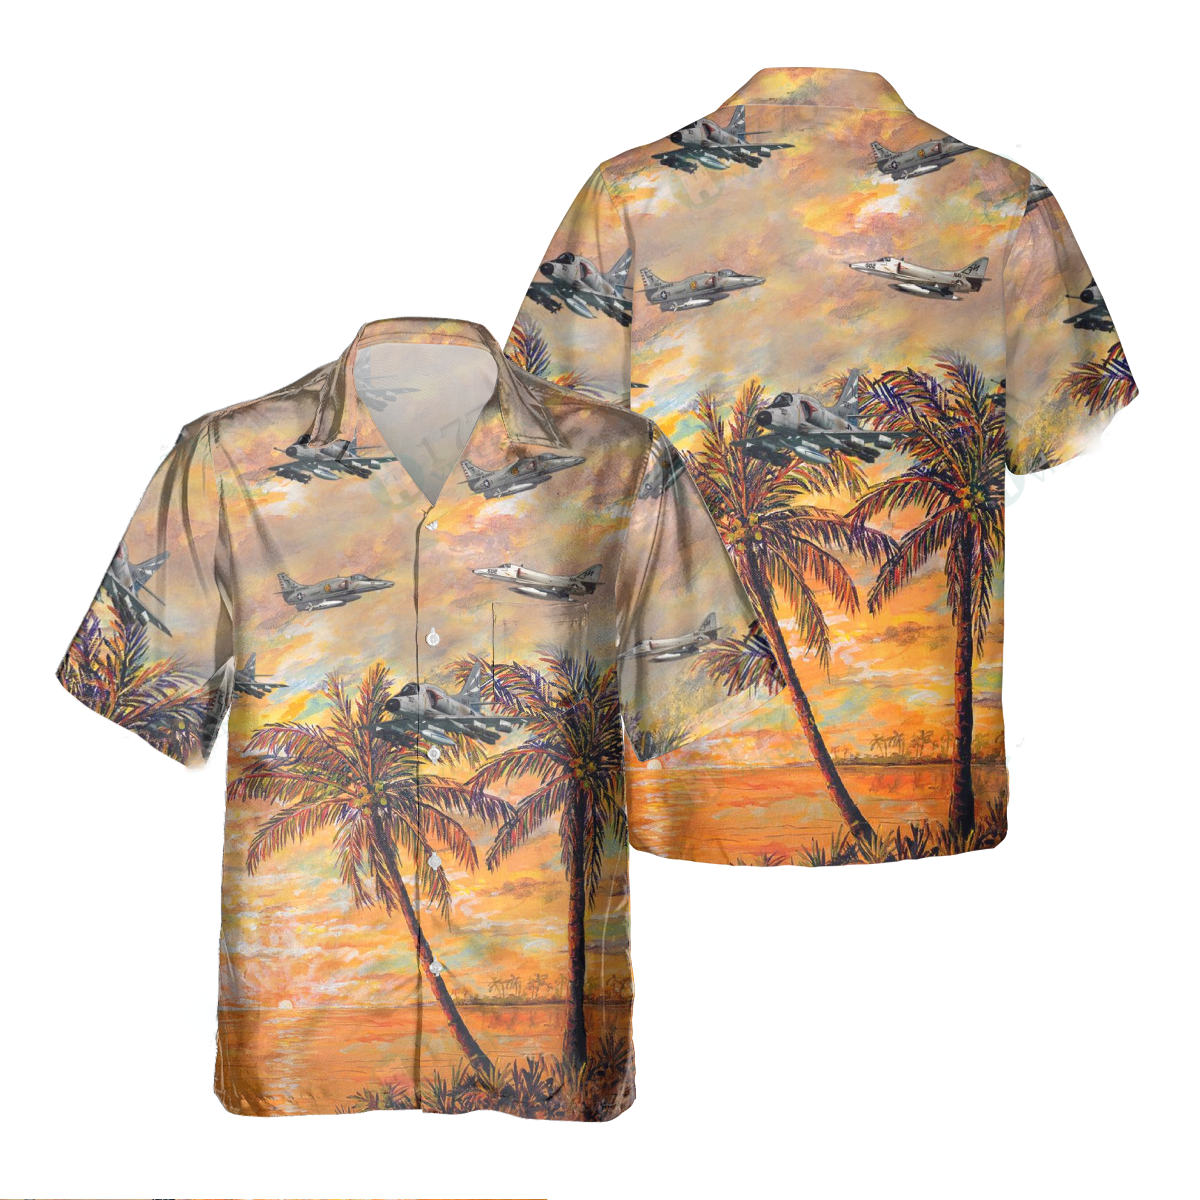 A-4 Skyhawk Pocket Hawaiian Shirt/ Hawaiian Shirt for Men Dad Veteran/ Patriot Day